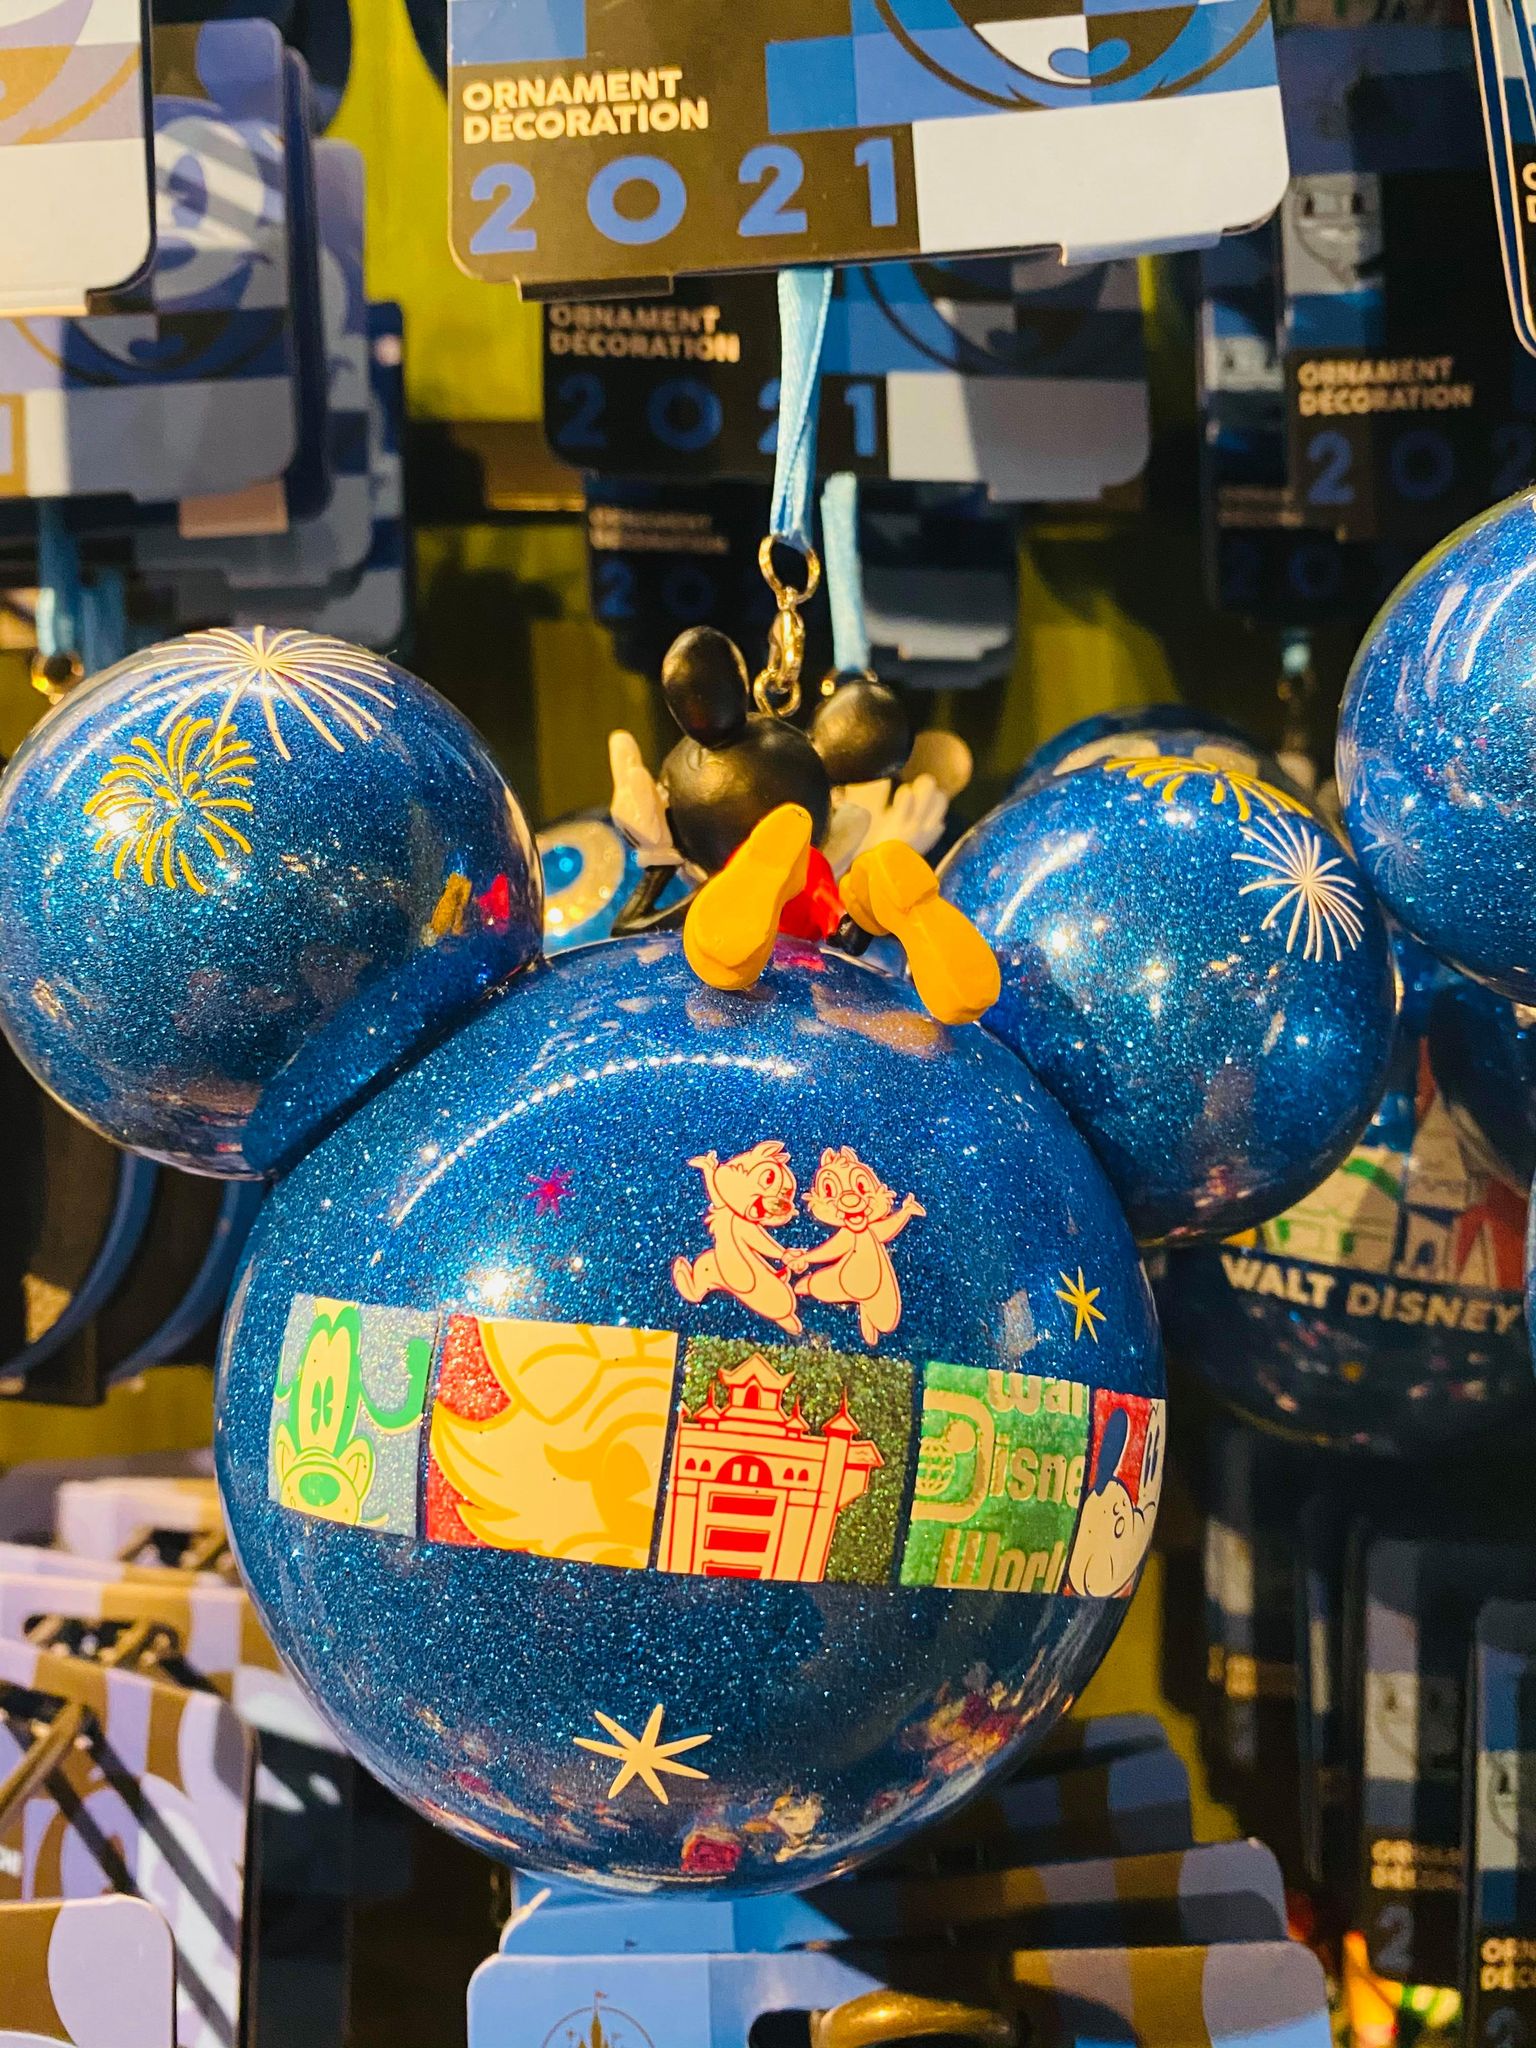 2021 Christmas Ornaments Have Arrived at Walt Disney World